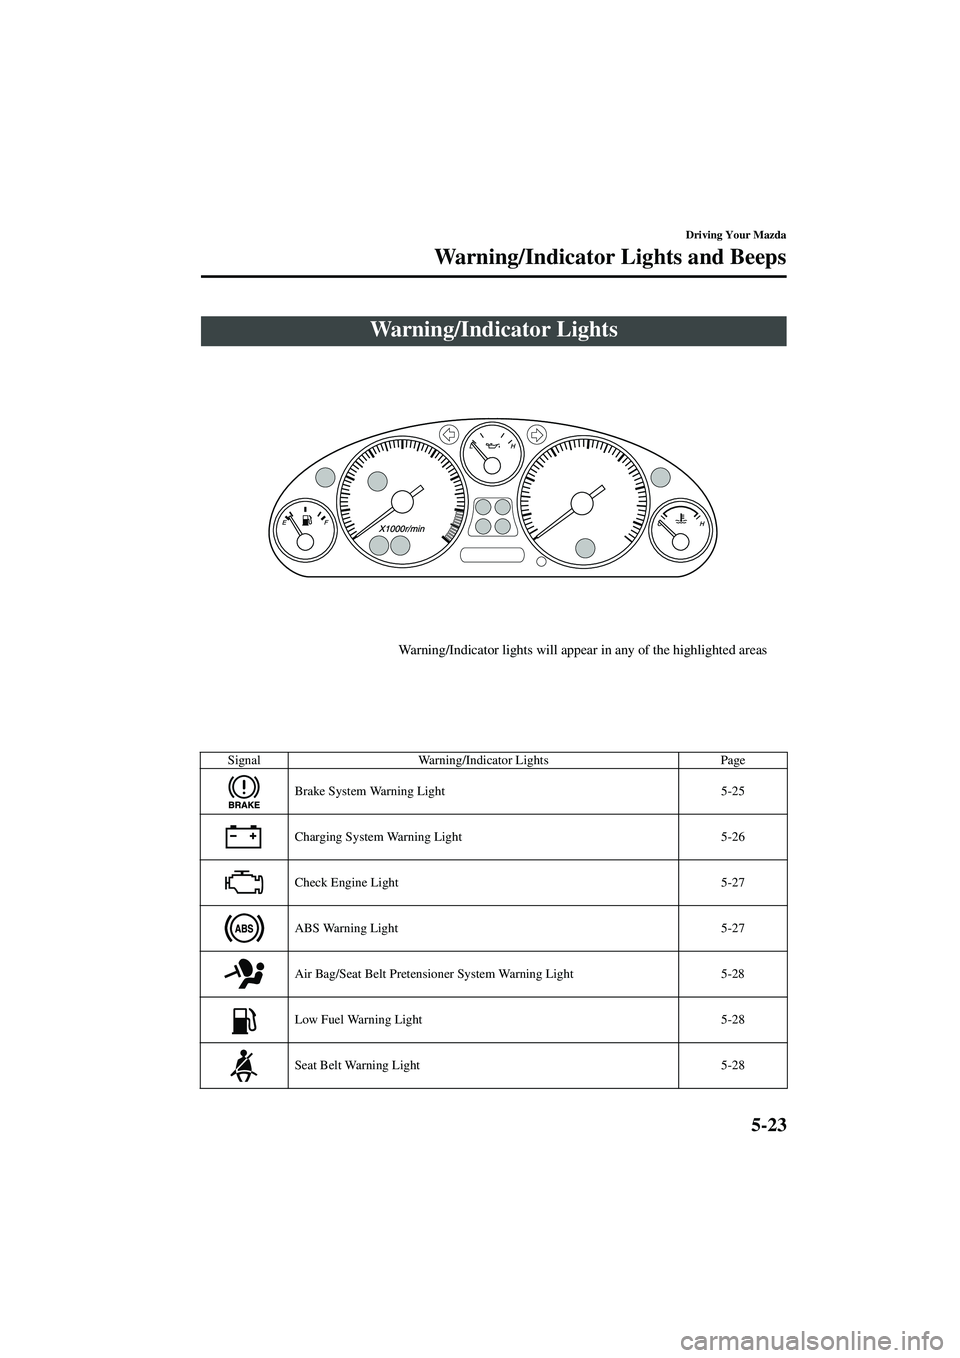 MAZDA MODEL MX-5 MIATA 2004  Owners Manual 5-23
Driving Your Mazda
Form No. 8S15-EA-03G
Warning/Indicator Lights and Beeps
Warning/Indicator Lights
SignalWarning/Indicator Lights Page
Brake System Warning Light 5-25
Charging System Warning Lig